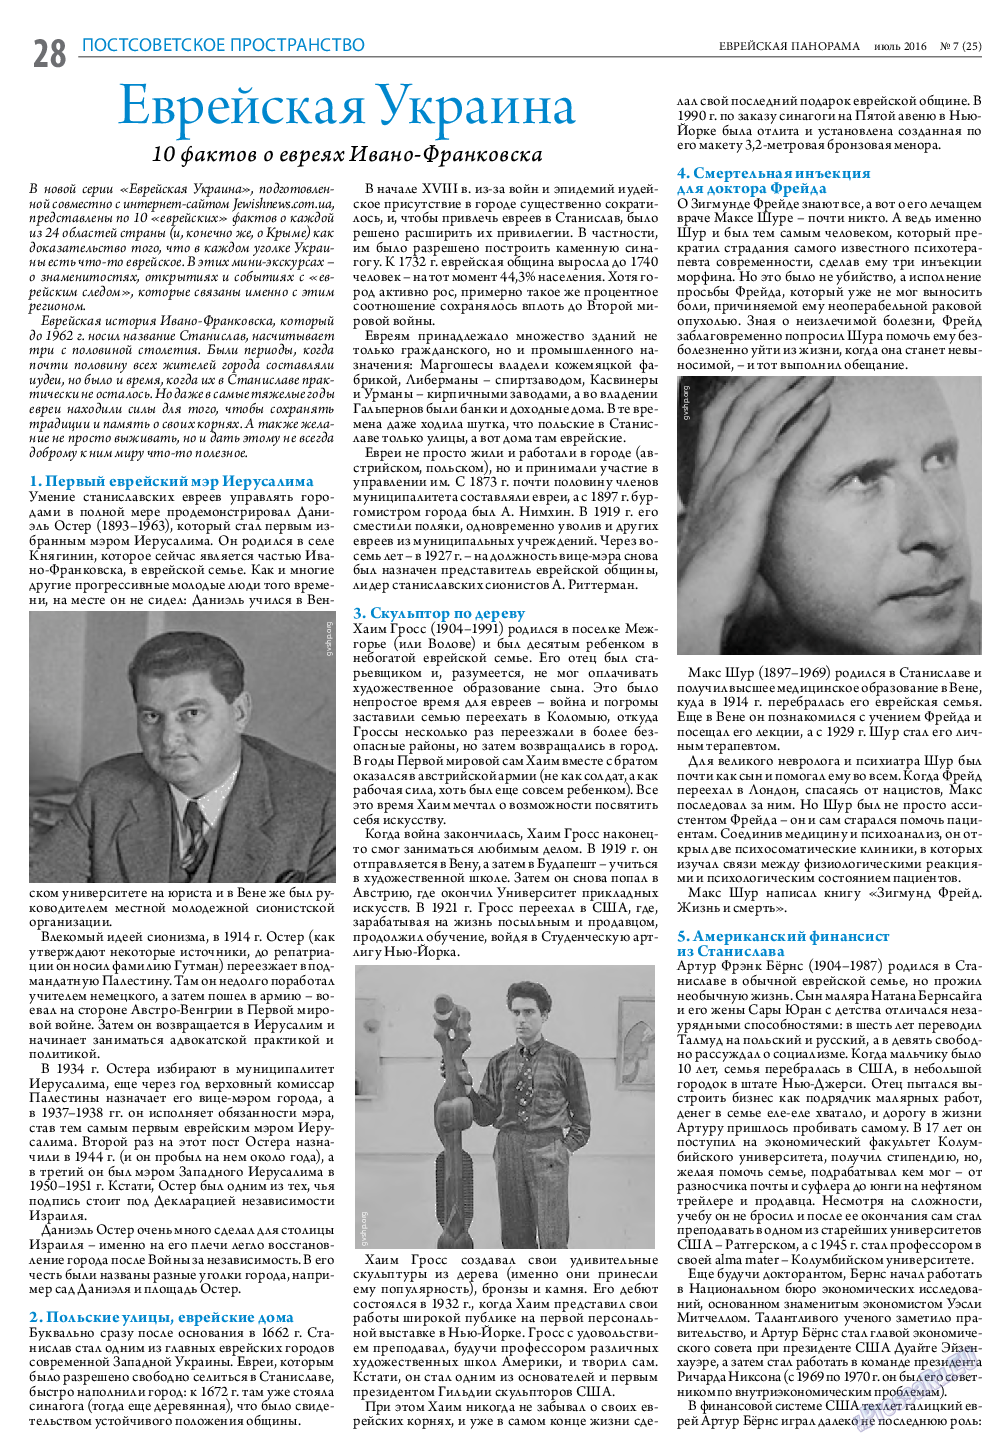 Еврейская панорама, газета. 2016 №7 стр.28